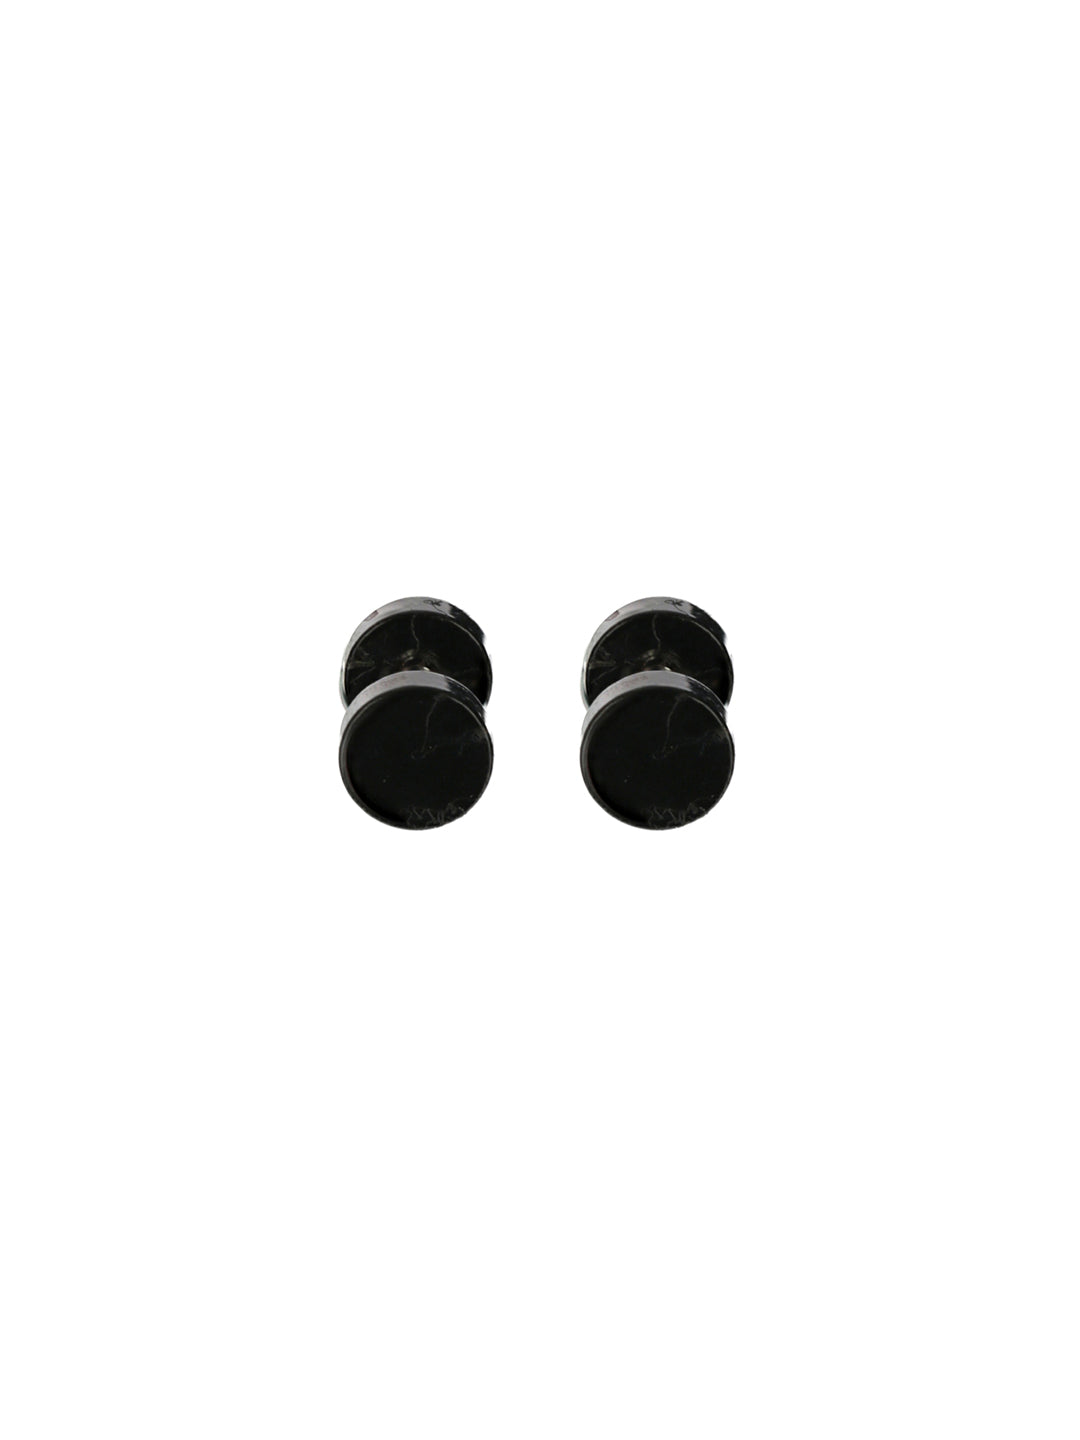 Update 209+ black circle earrings for men best